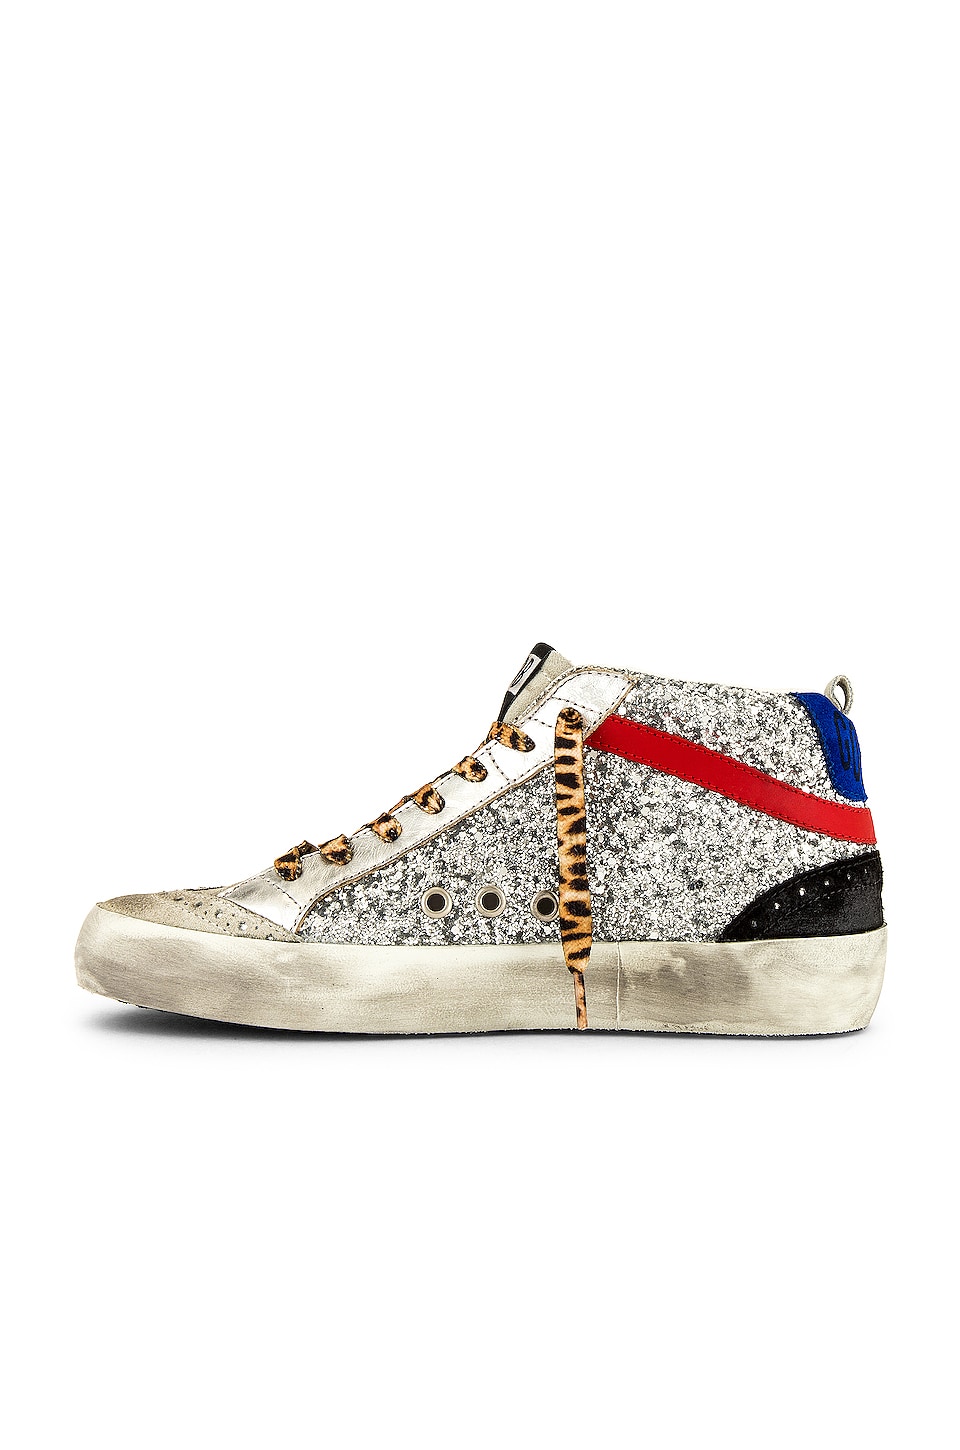 Golden Goose Mid Star Glitter Sneaker in Silver, Red & Black | REVOLVE